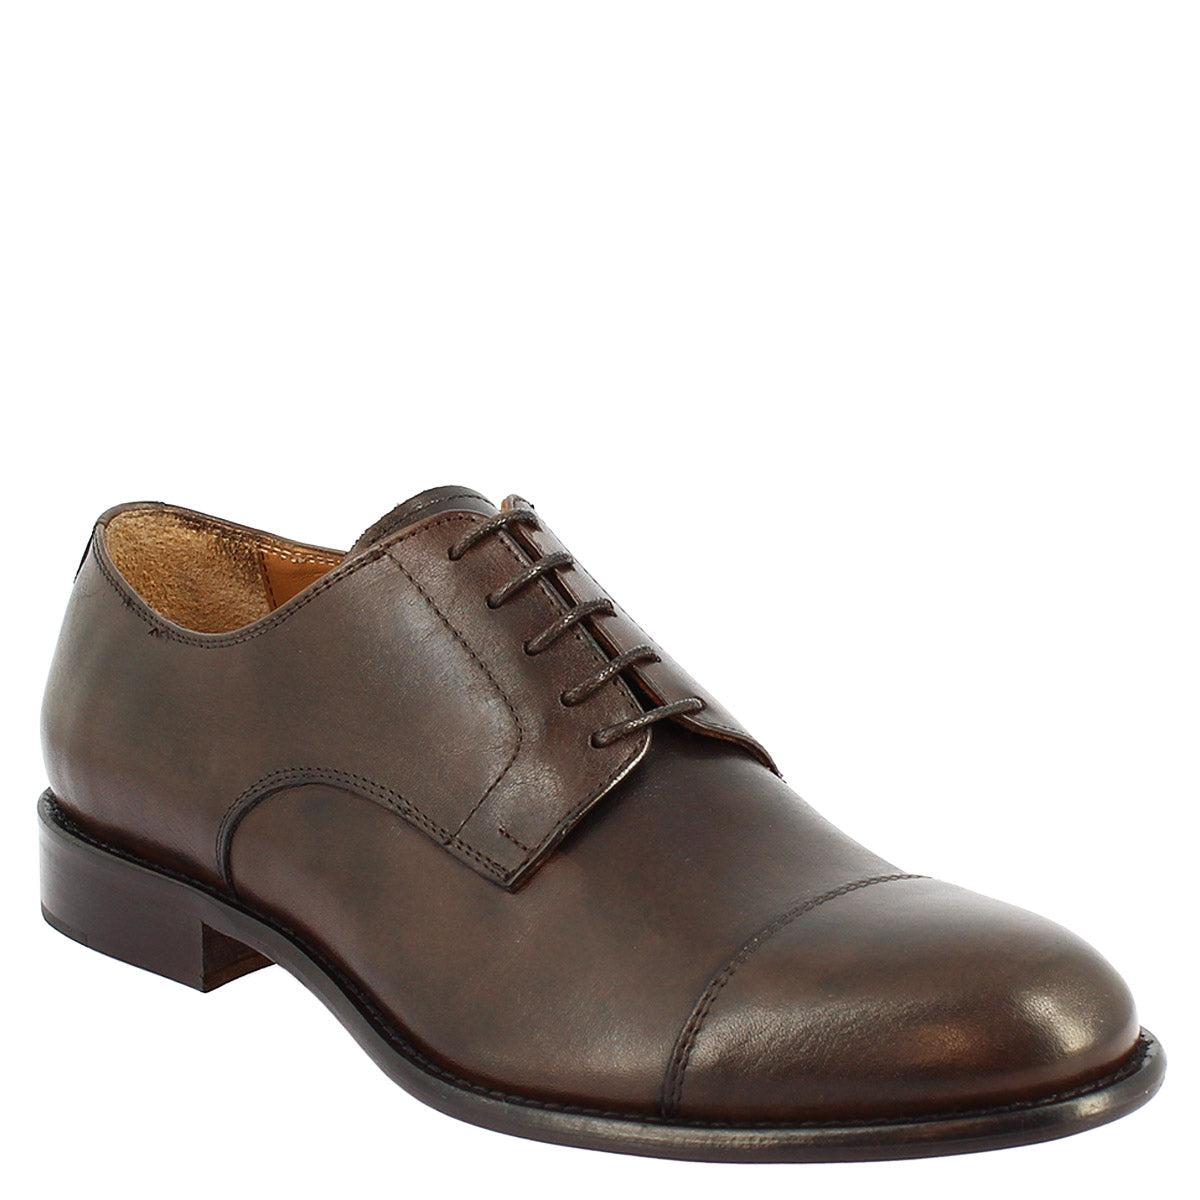 Men's derby shoes handmade in elegant dark brown leather